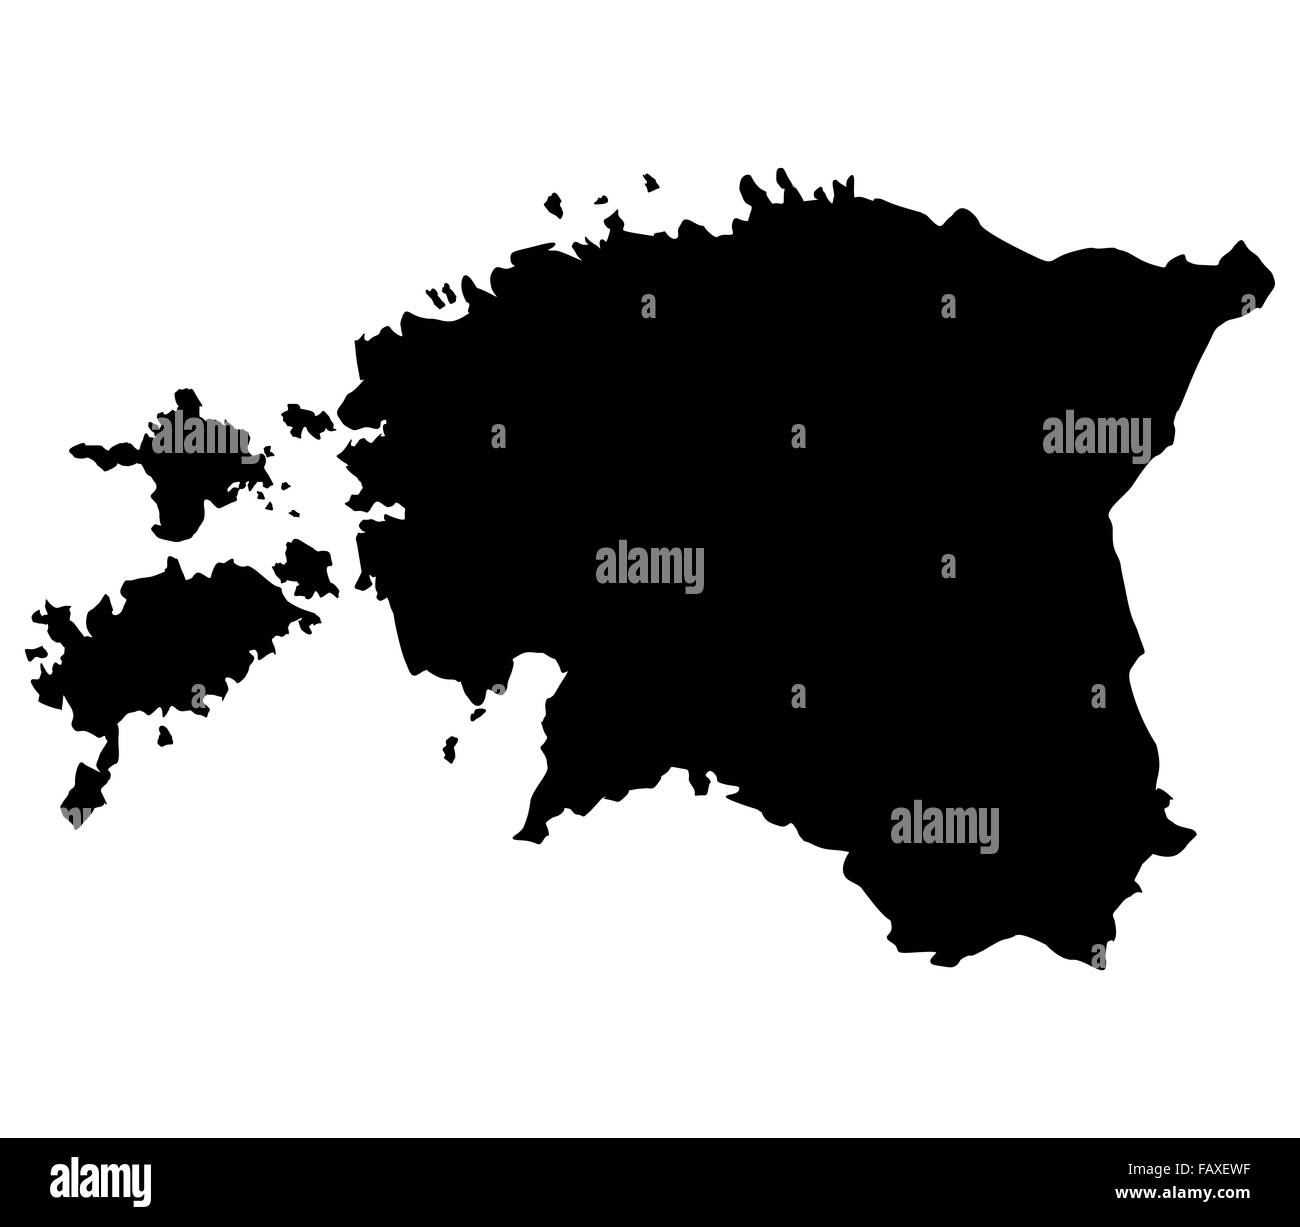 estonia map Stock Photo